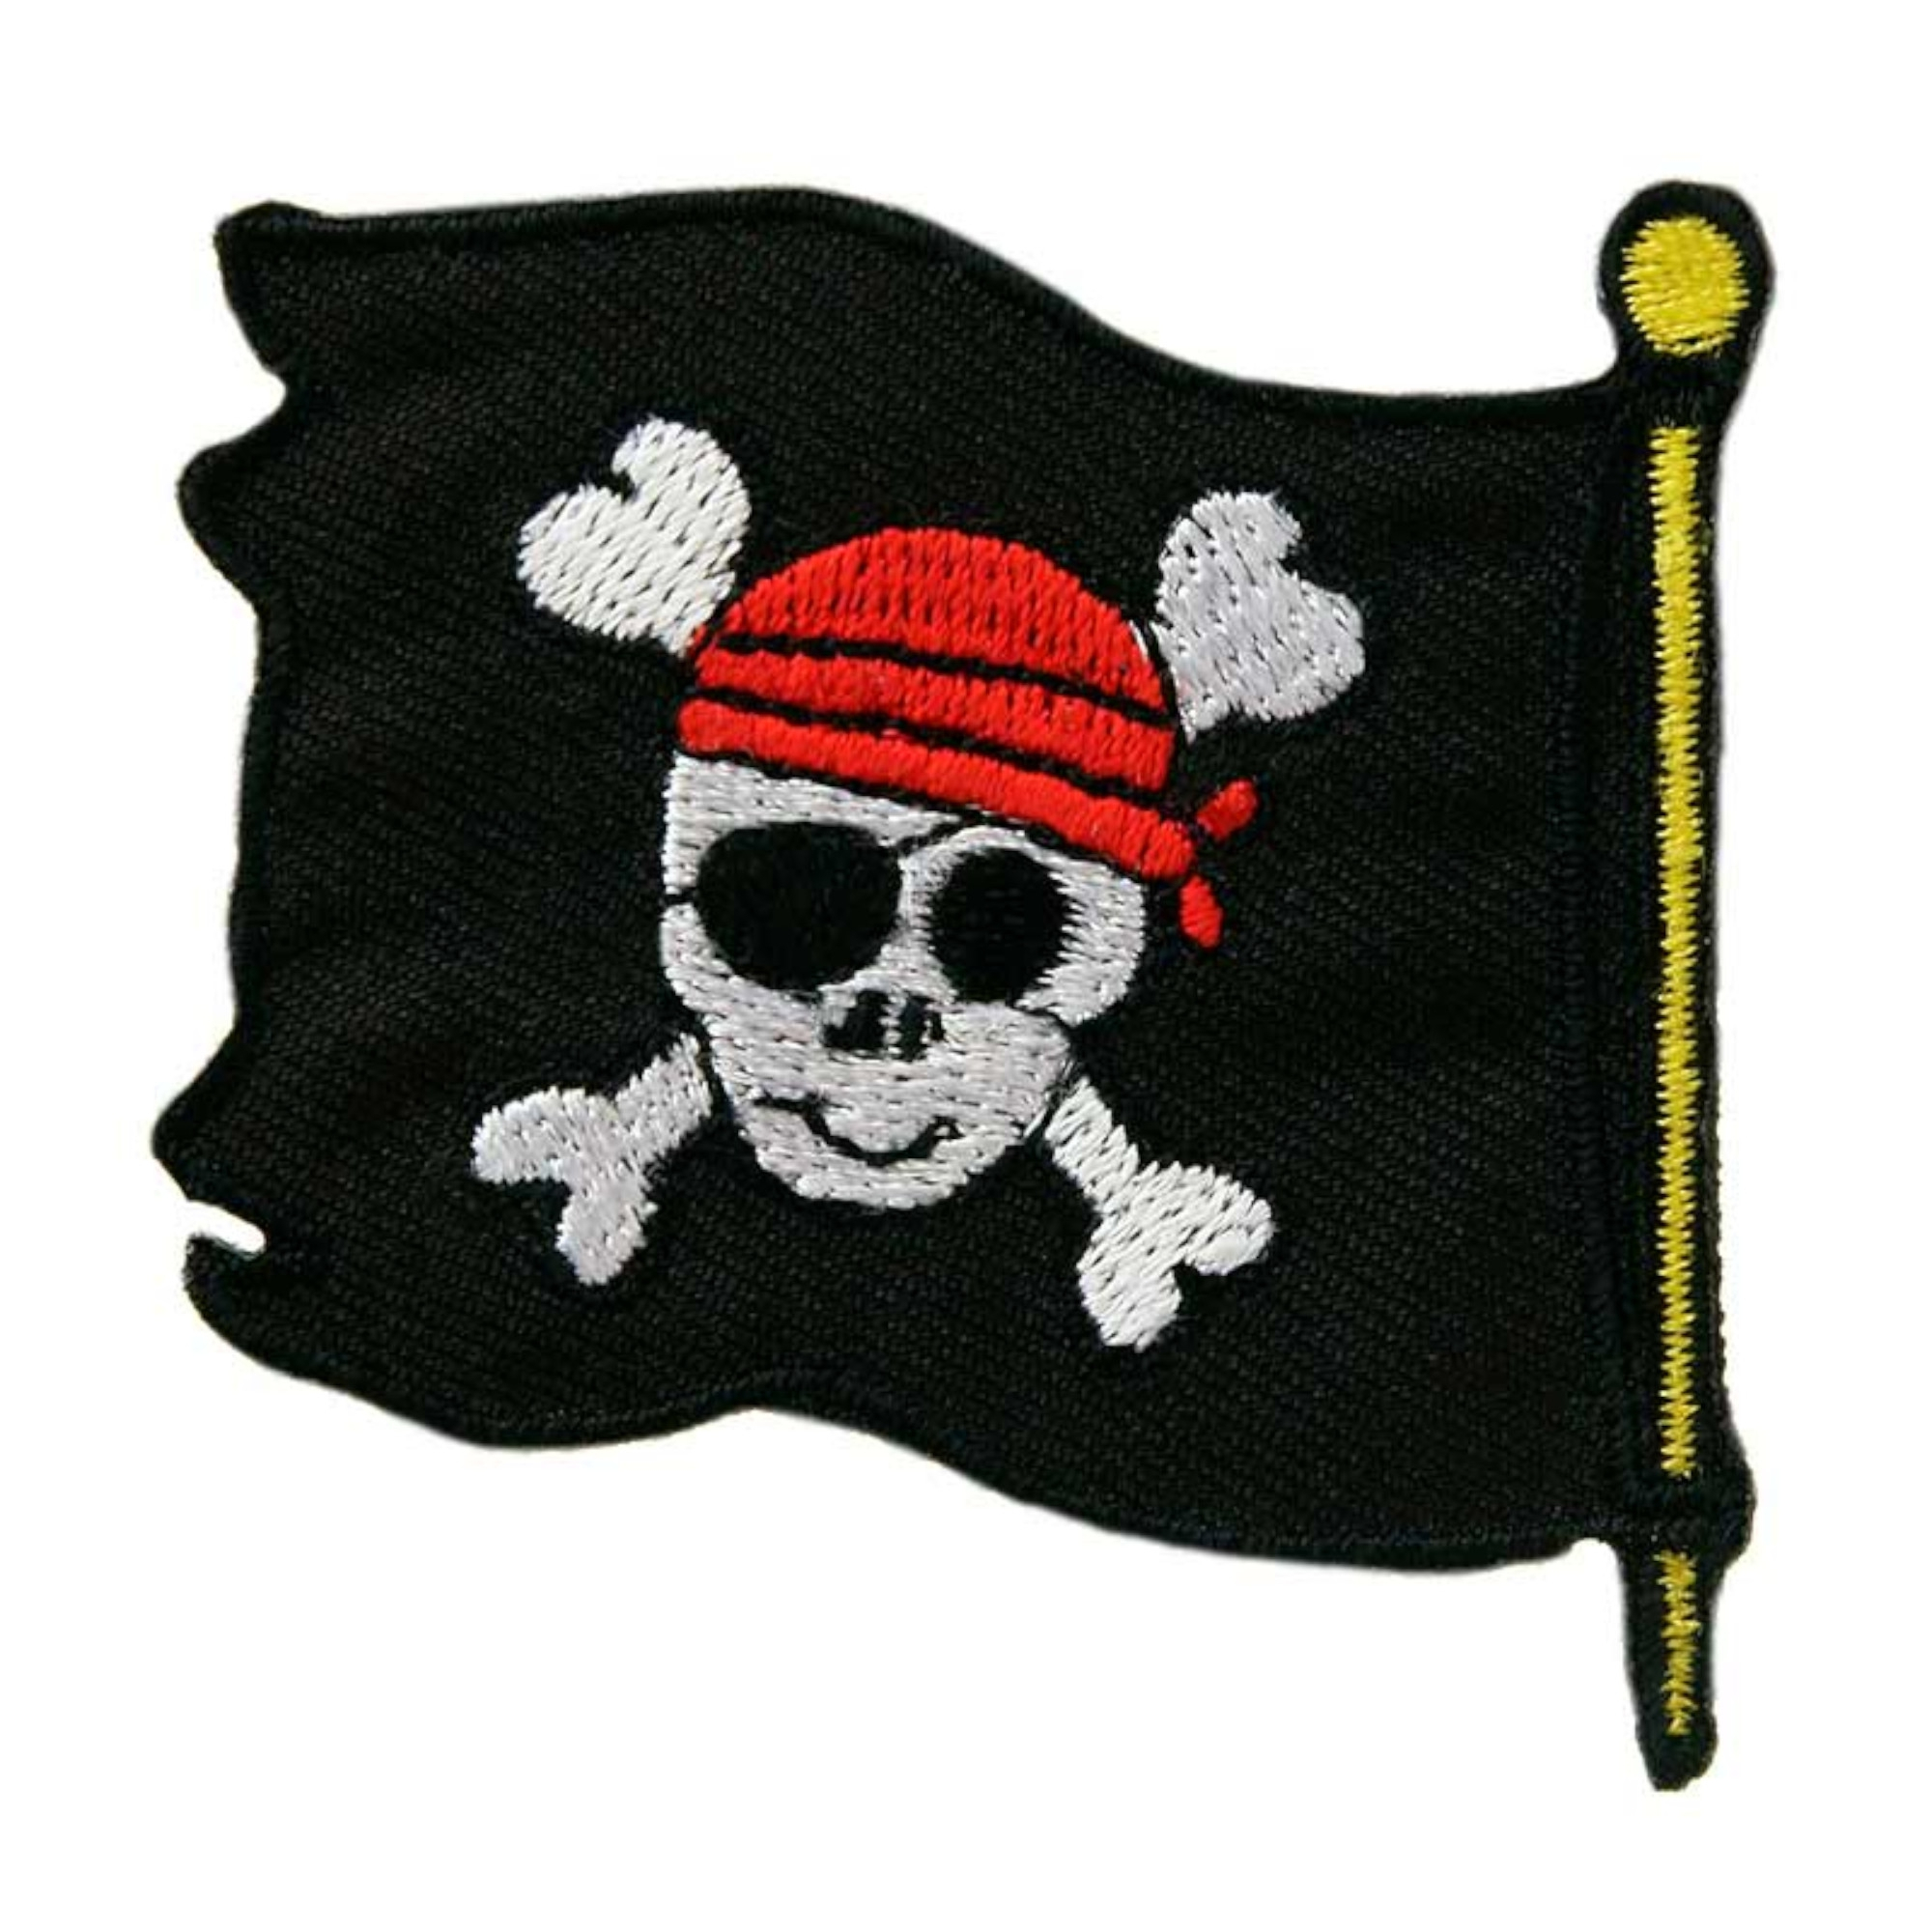 Appliqué pirate flag